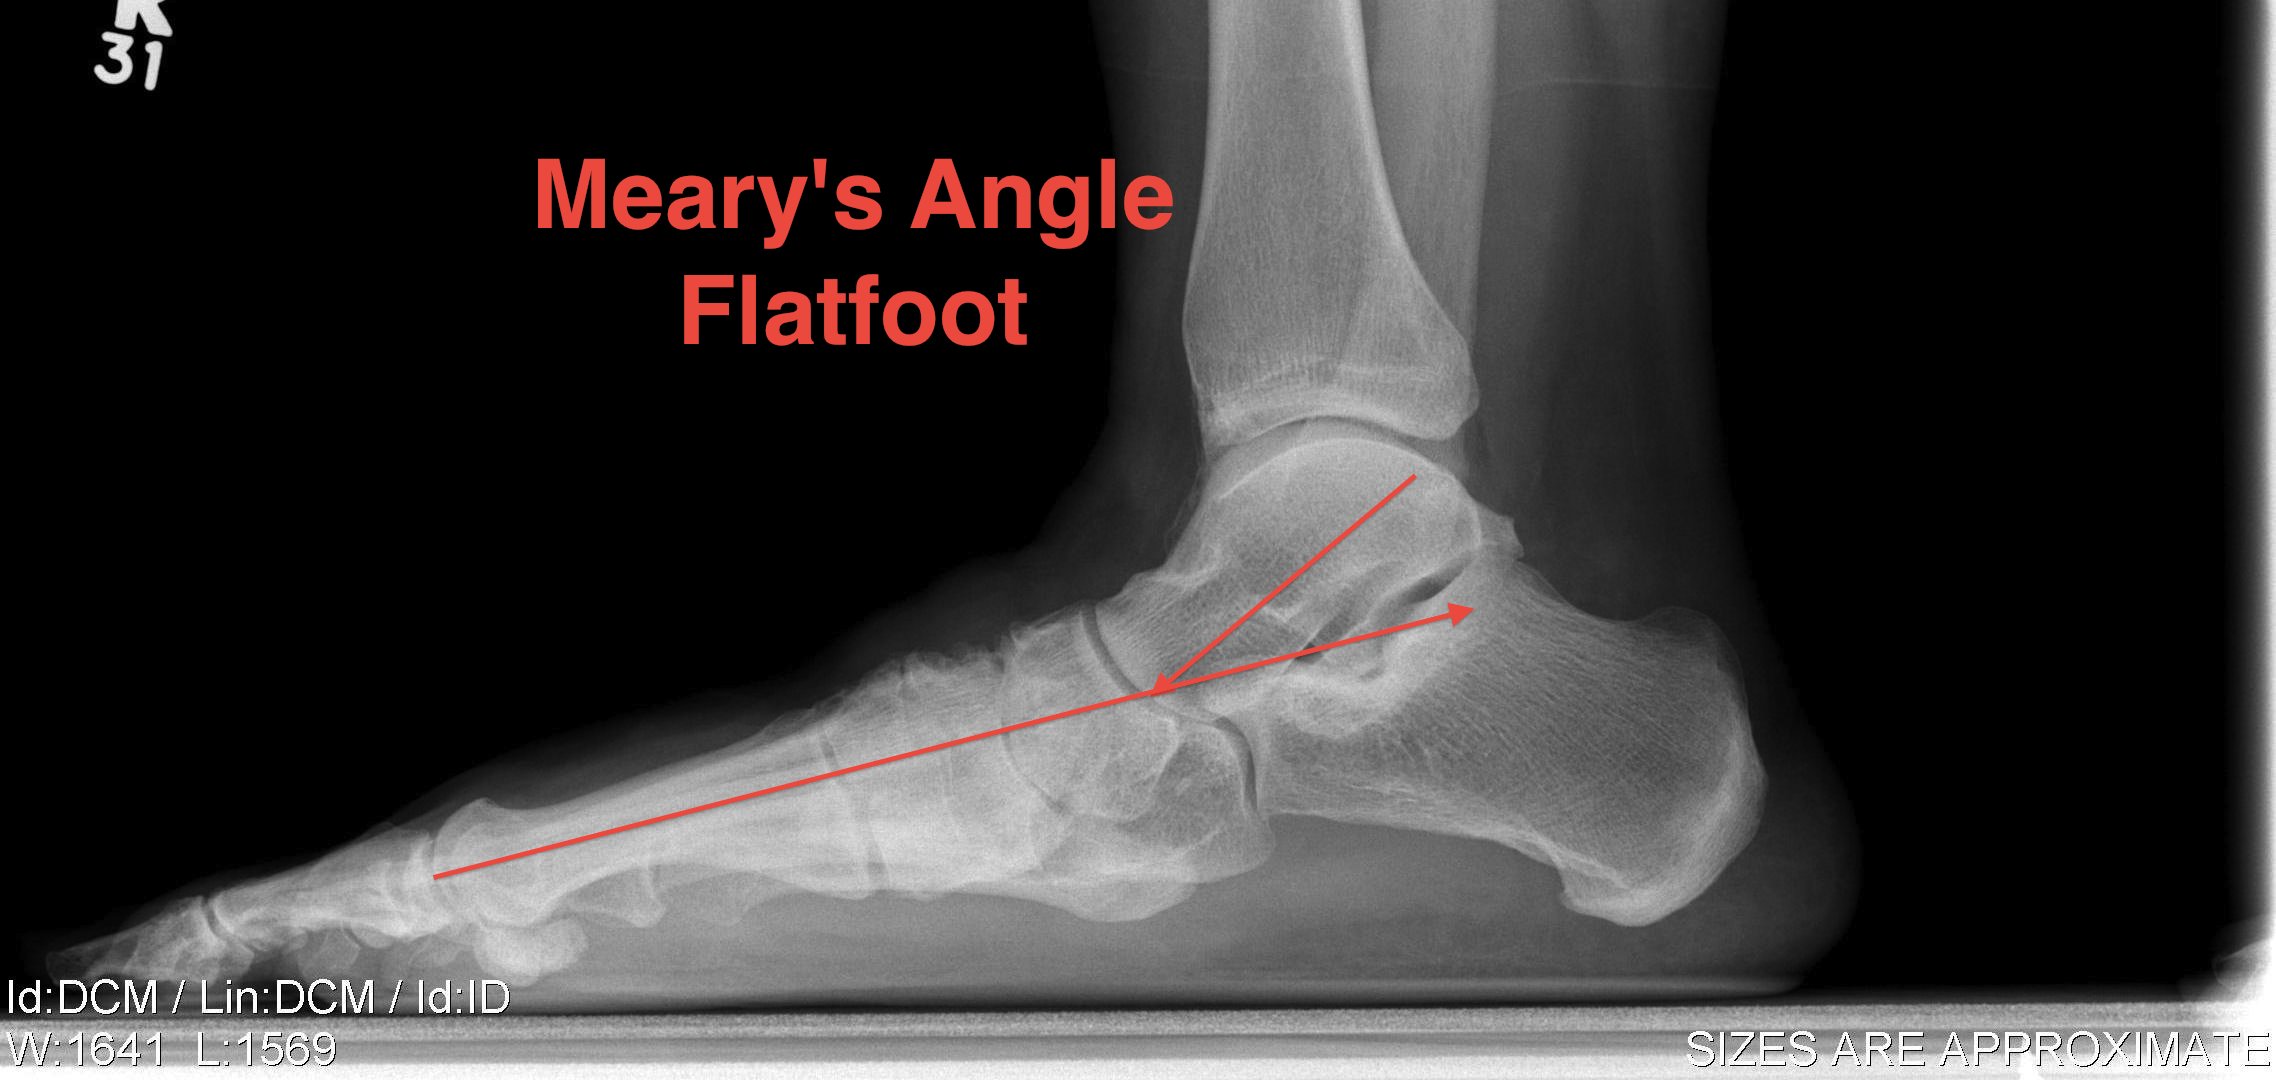 Planovalgus Foot Meary's Angle